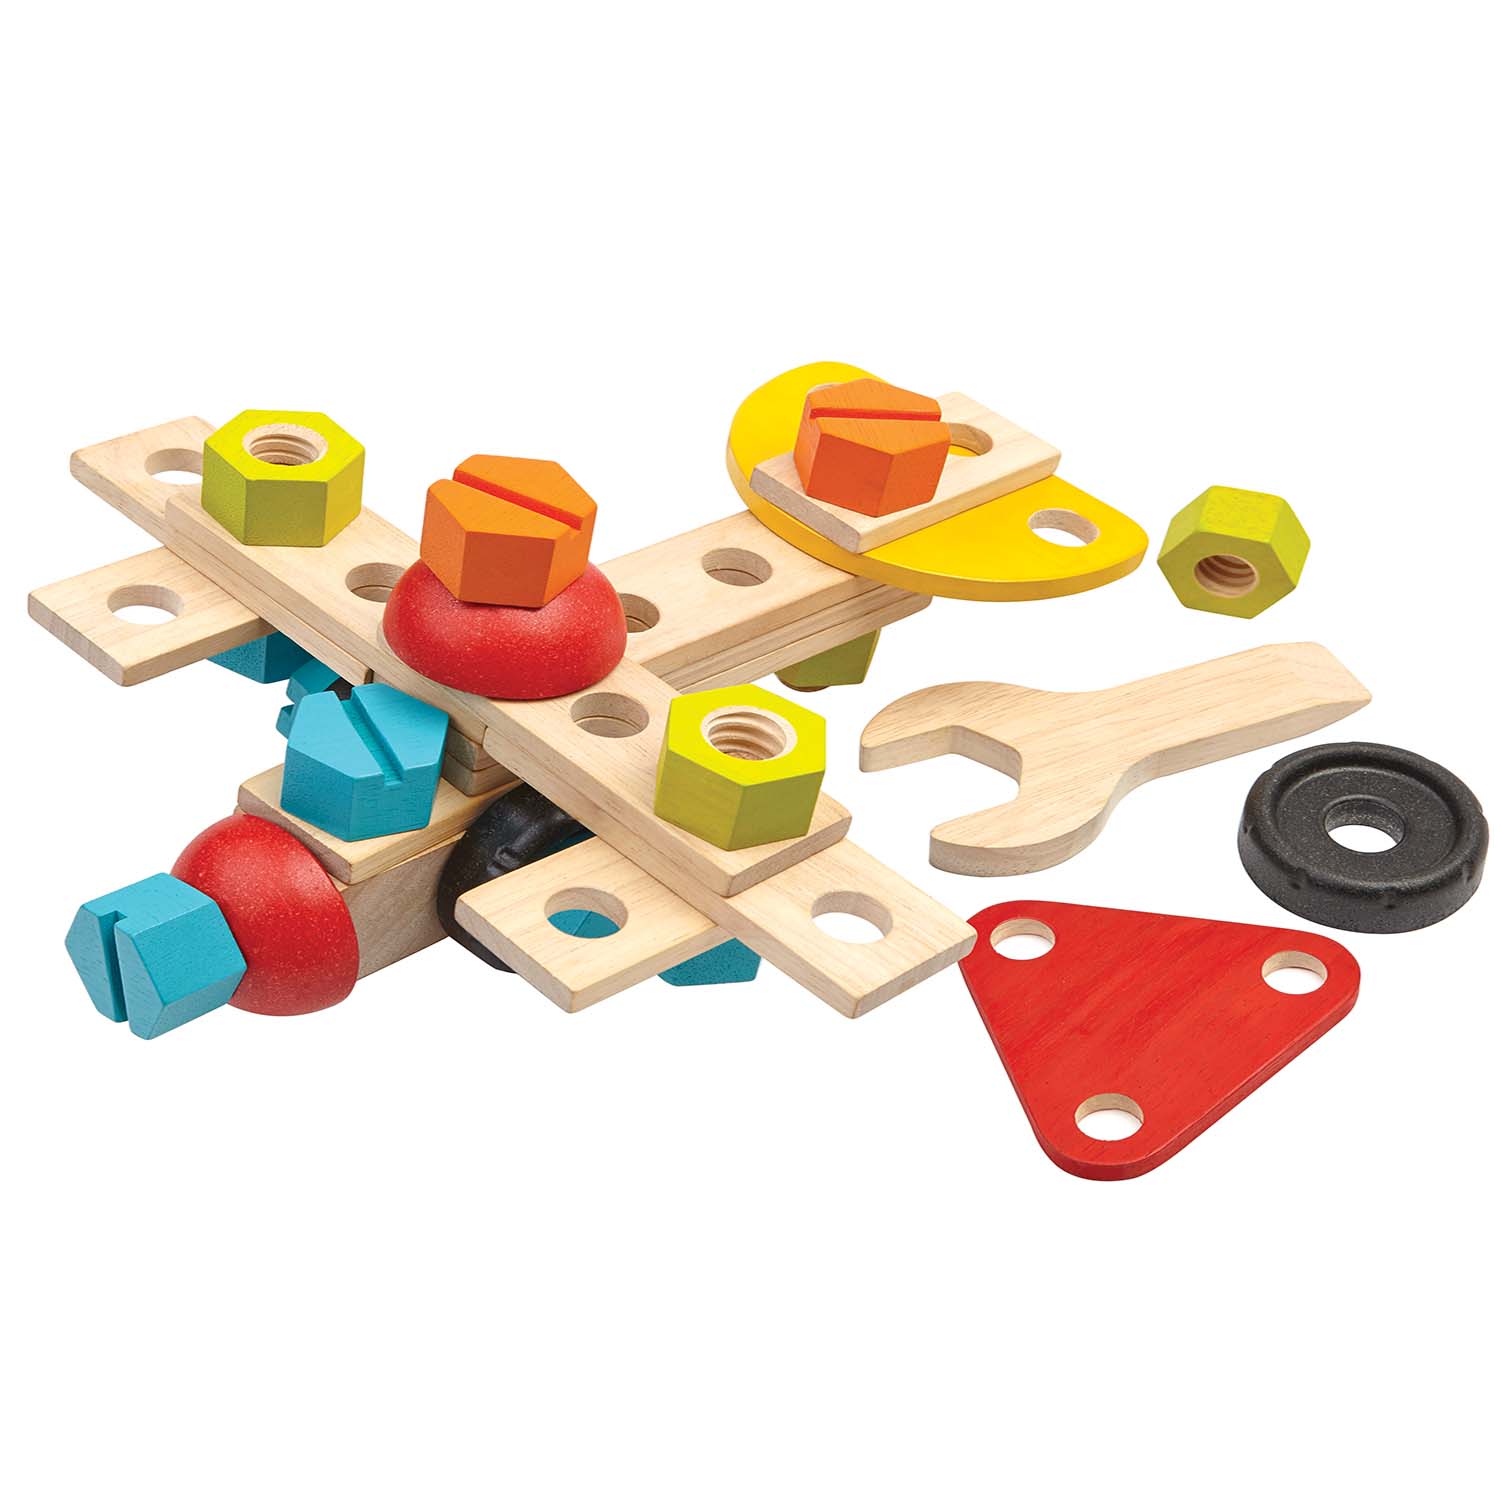 Construction Set Construction Toys for Preschoolers Becker's School 